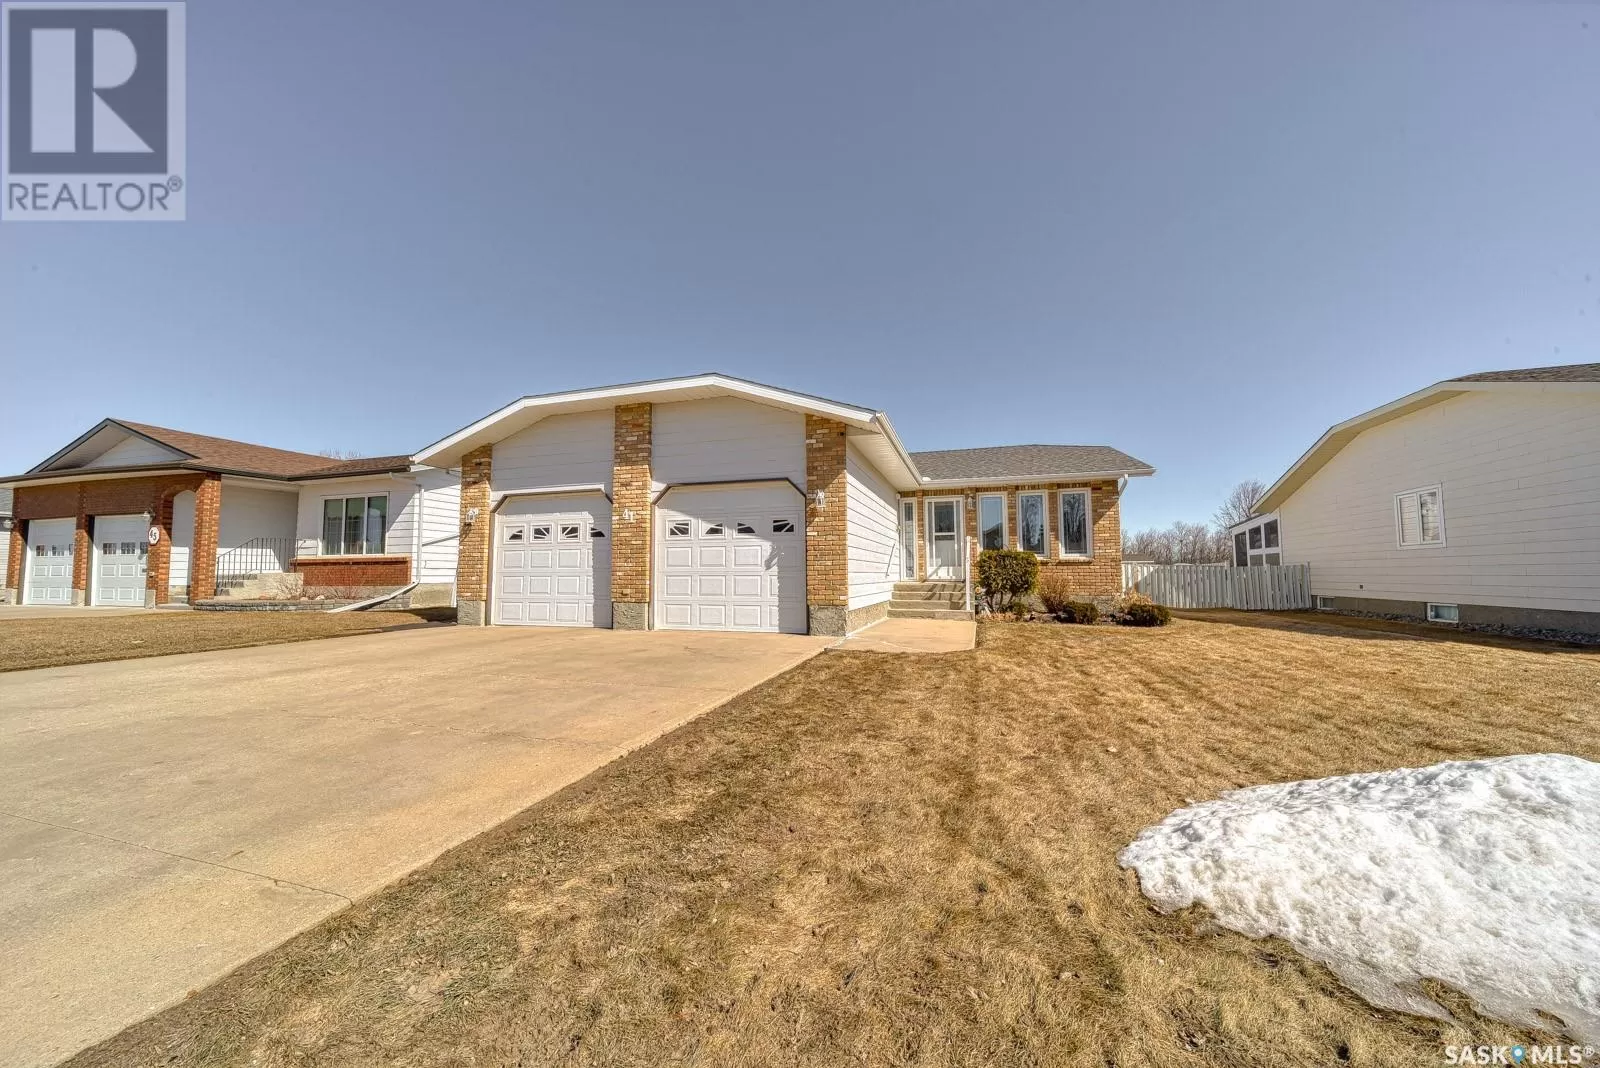 House for rent: 41 Dahlia Crescent, Moose Jaw, Saskatchewan S6J 1E7